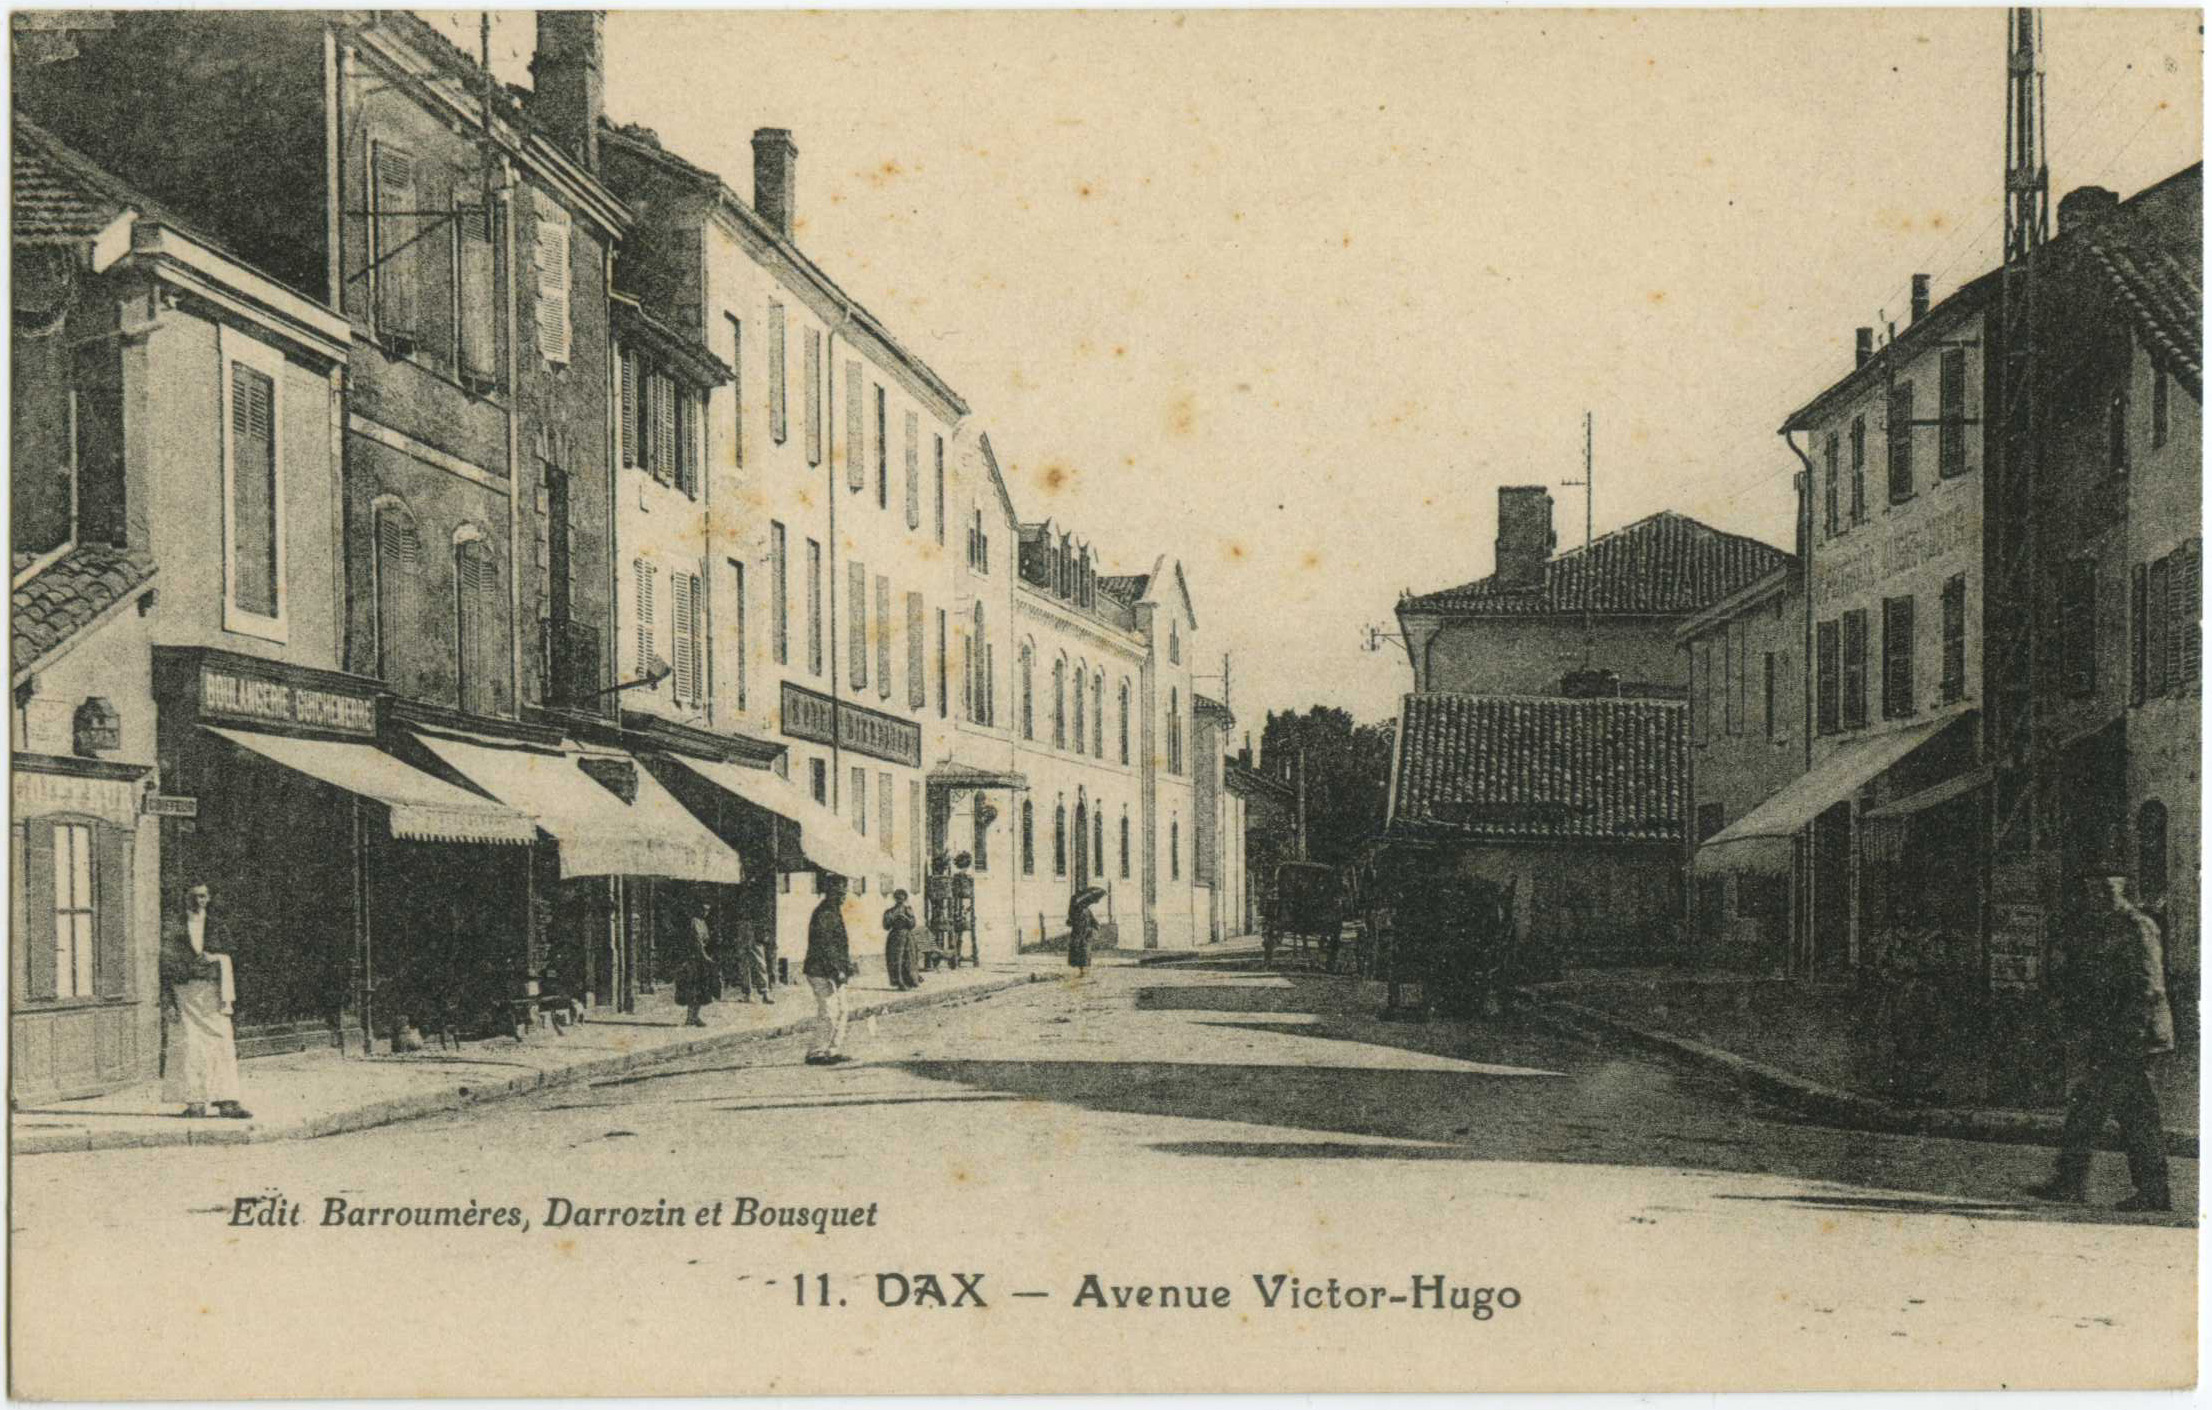 Dax - Avenue Victor-Hugo